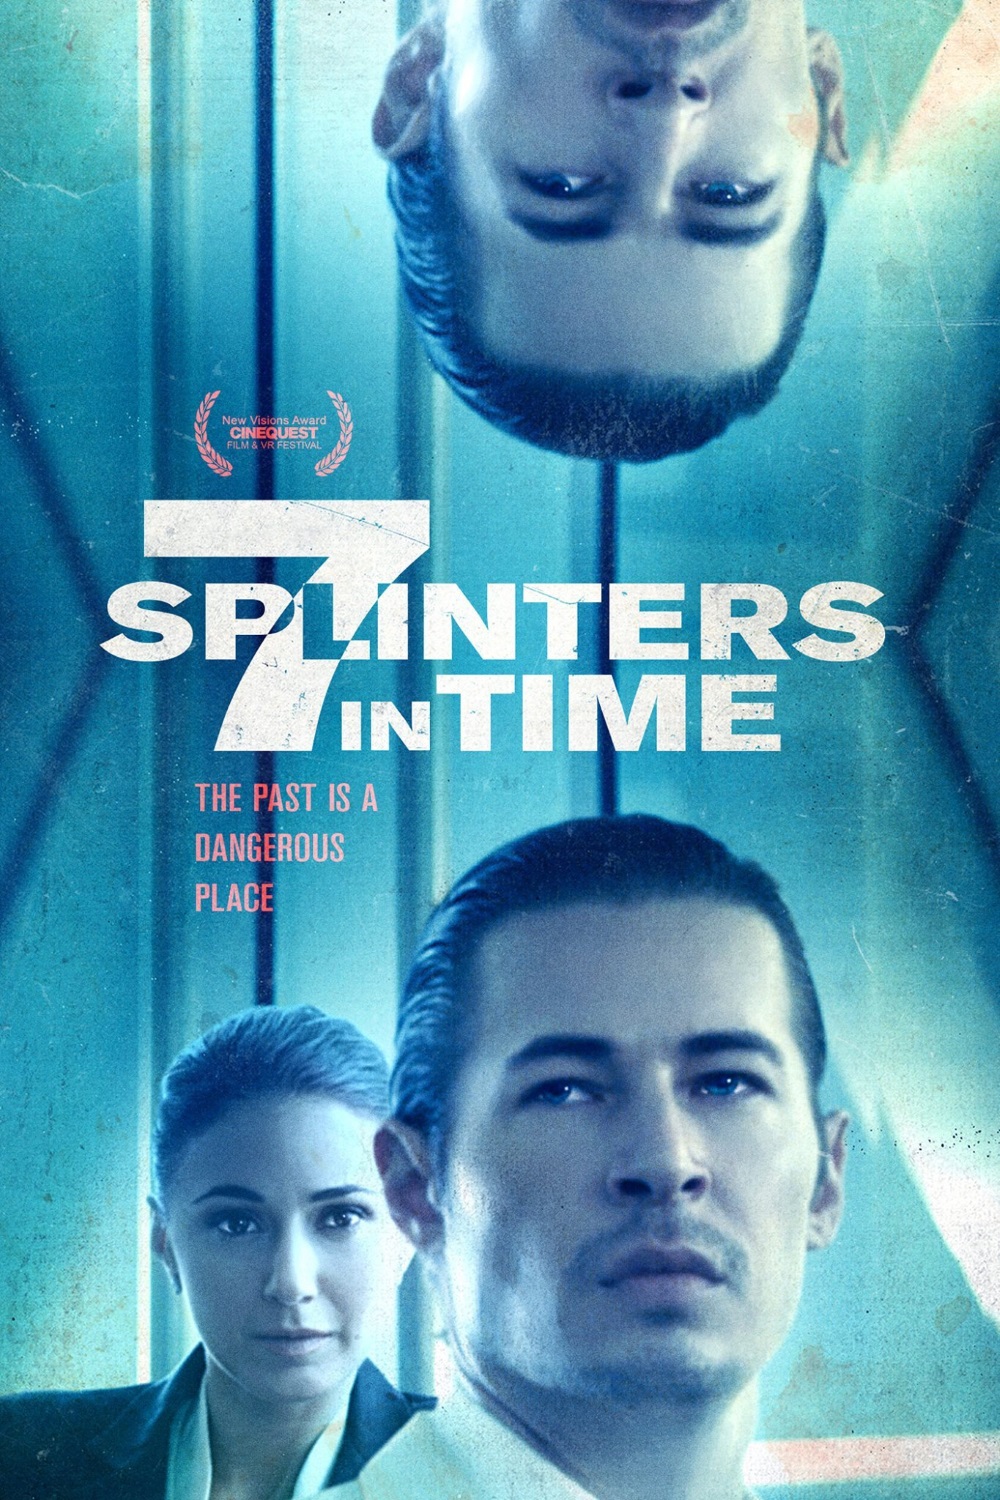 7-Splinters-in-Time-Poster